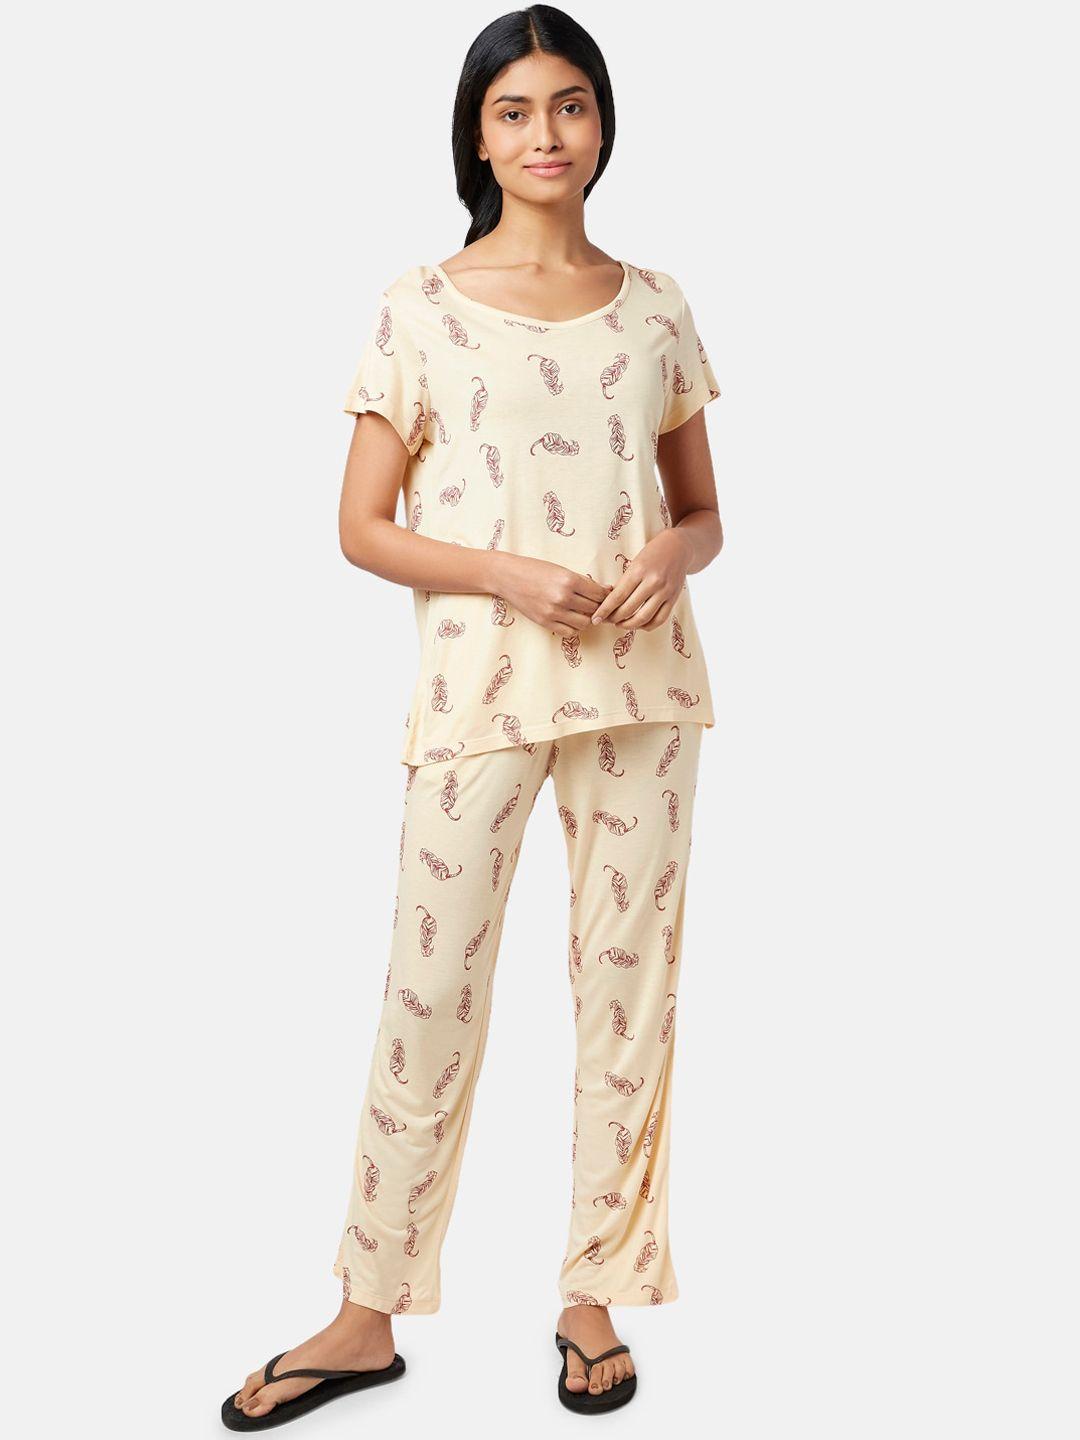 Dreamz by Pantaloons Women Printed Night suit